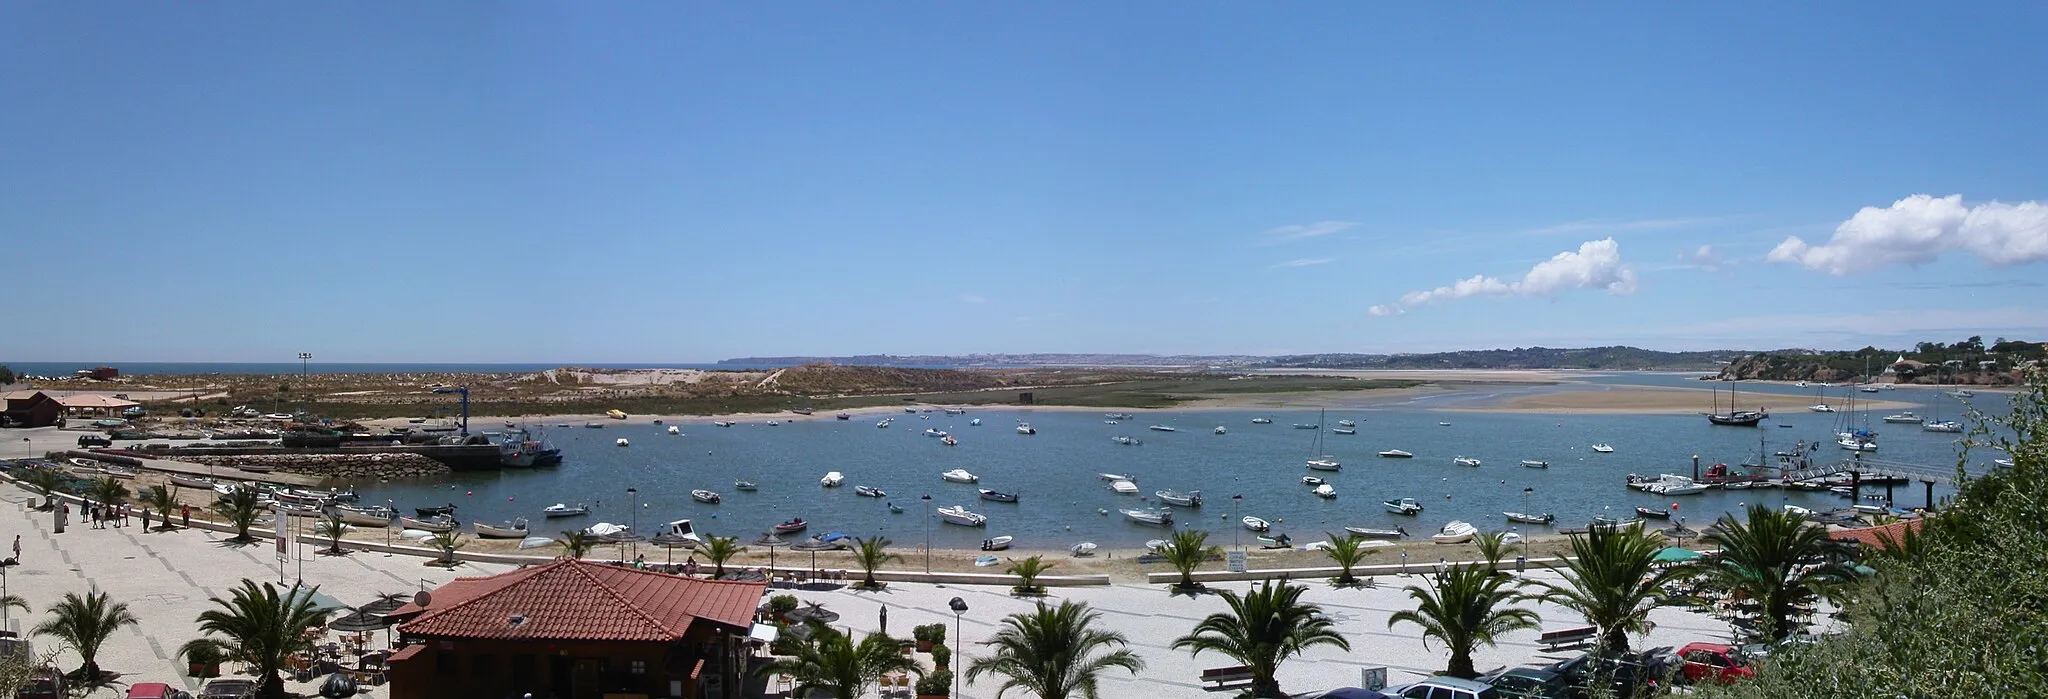 Photo showing: Port of Alvor, Portugal